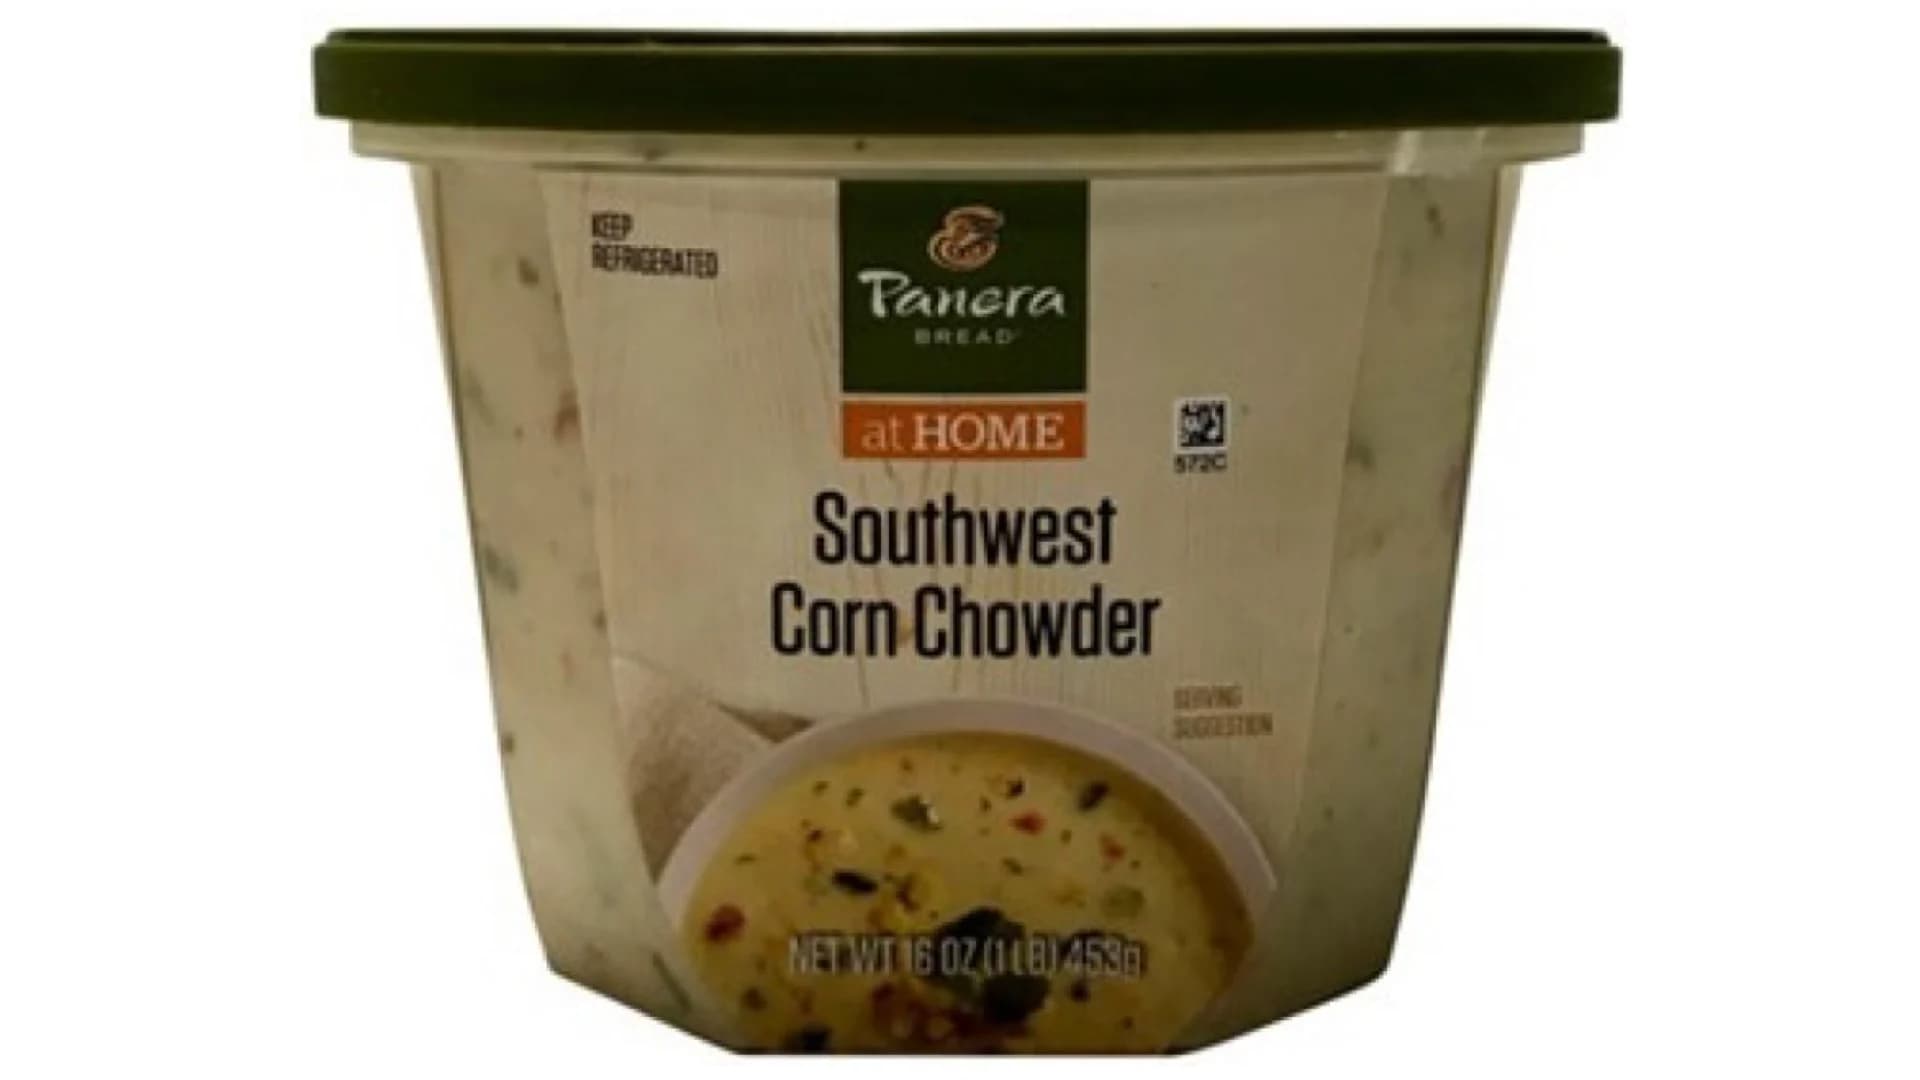 Recall Alert: Panera at Home Southwest Corn Chowder